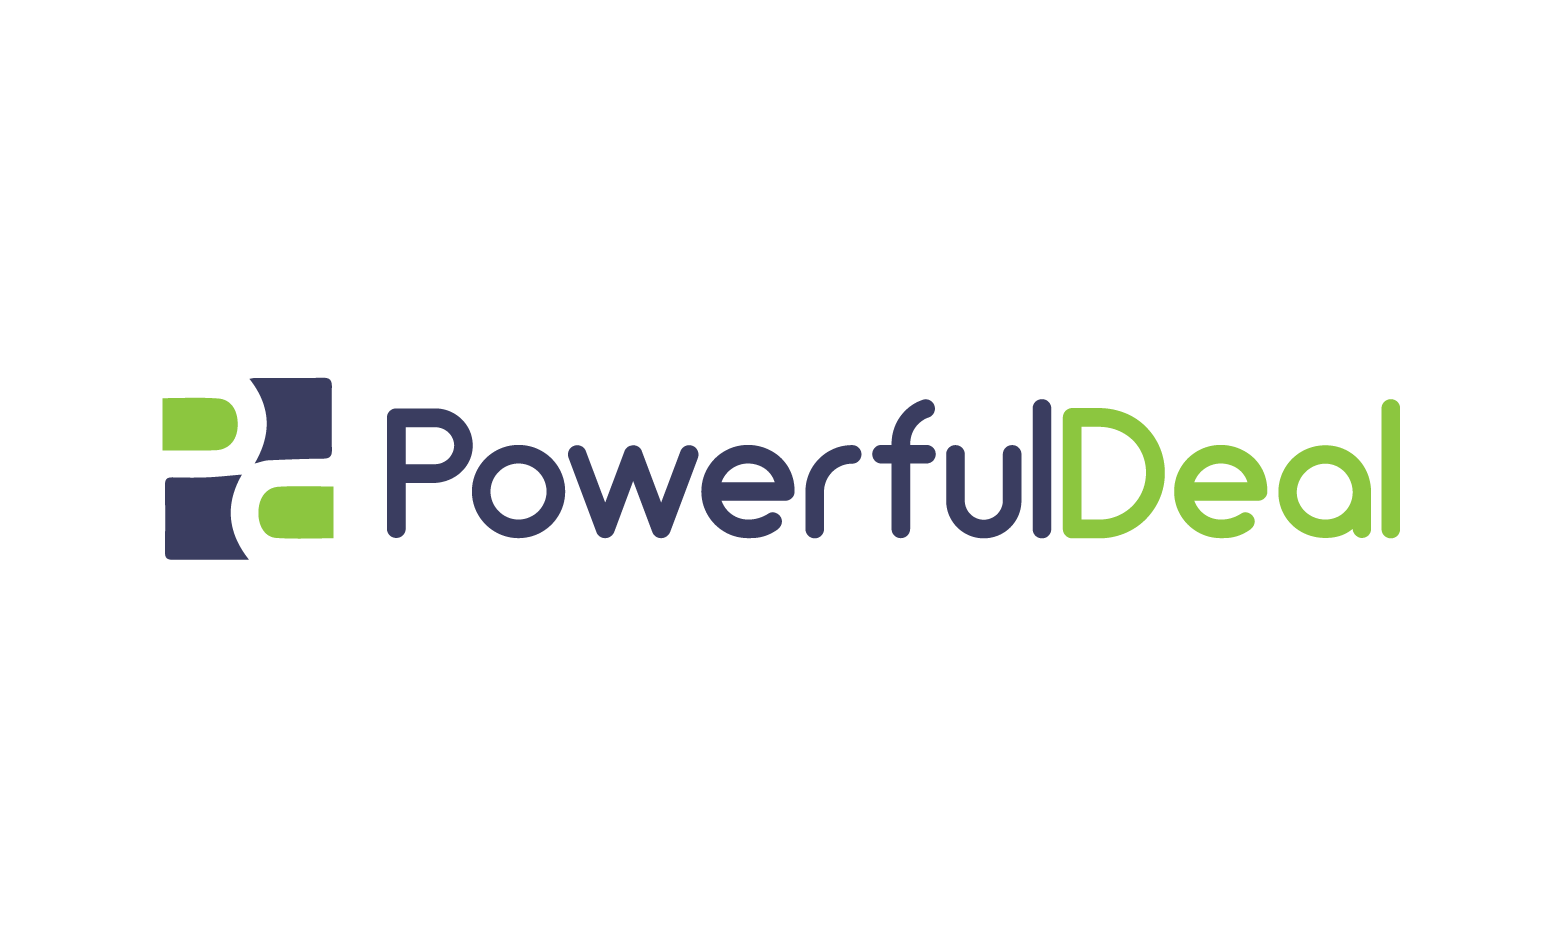 PowerfulDeal.com - Creative brandable domain for sale